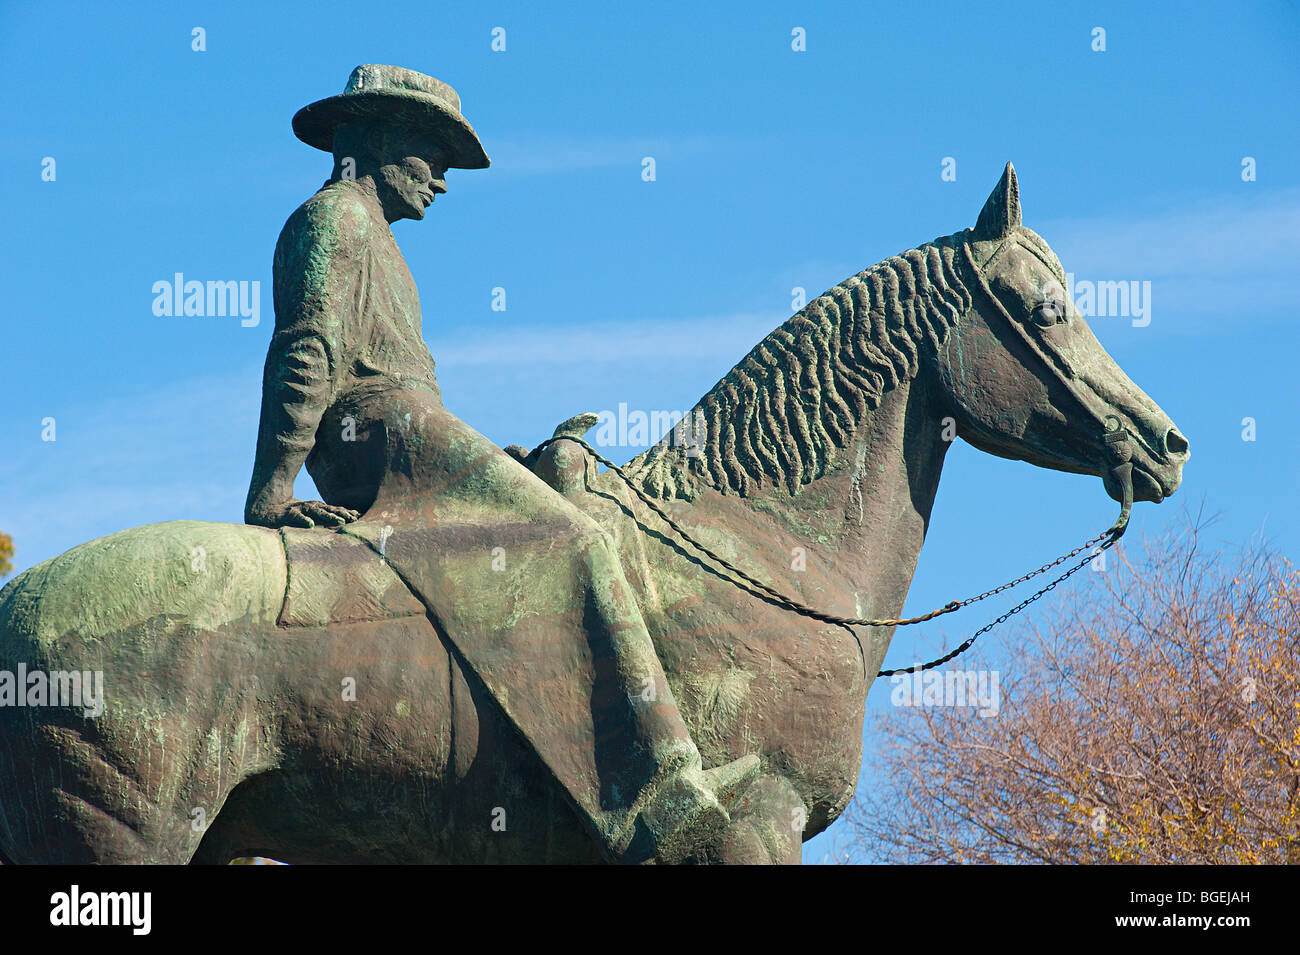 Former California governor, Earl Warren on a horse, Bronze statue, earl Warren Show grounds Santa Barbara Stock Photo